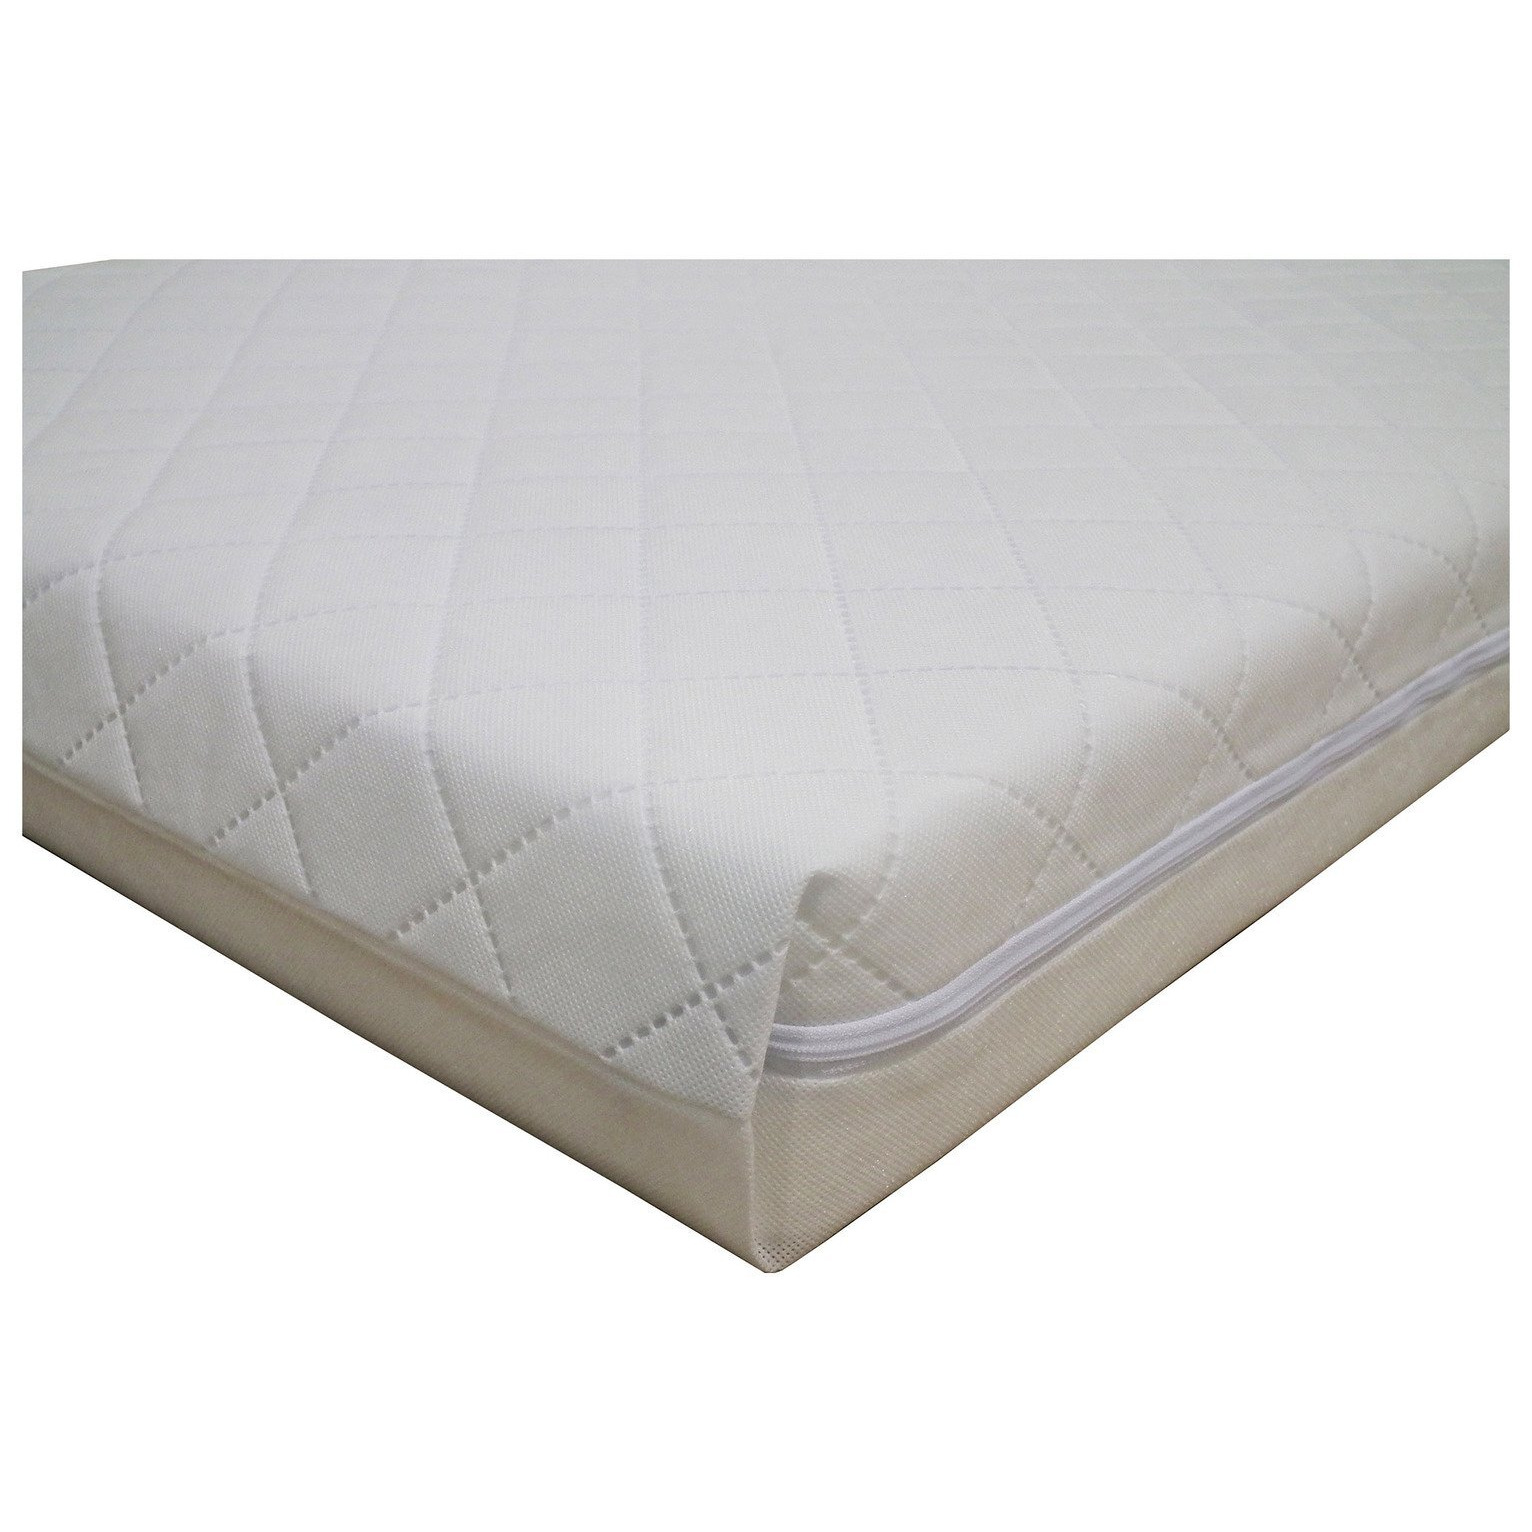 Cuggl 140 x 70cm Sprung Cot Bed Mattress - image 1